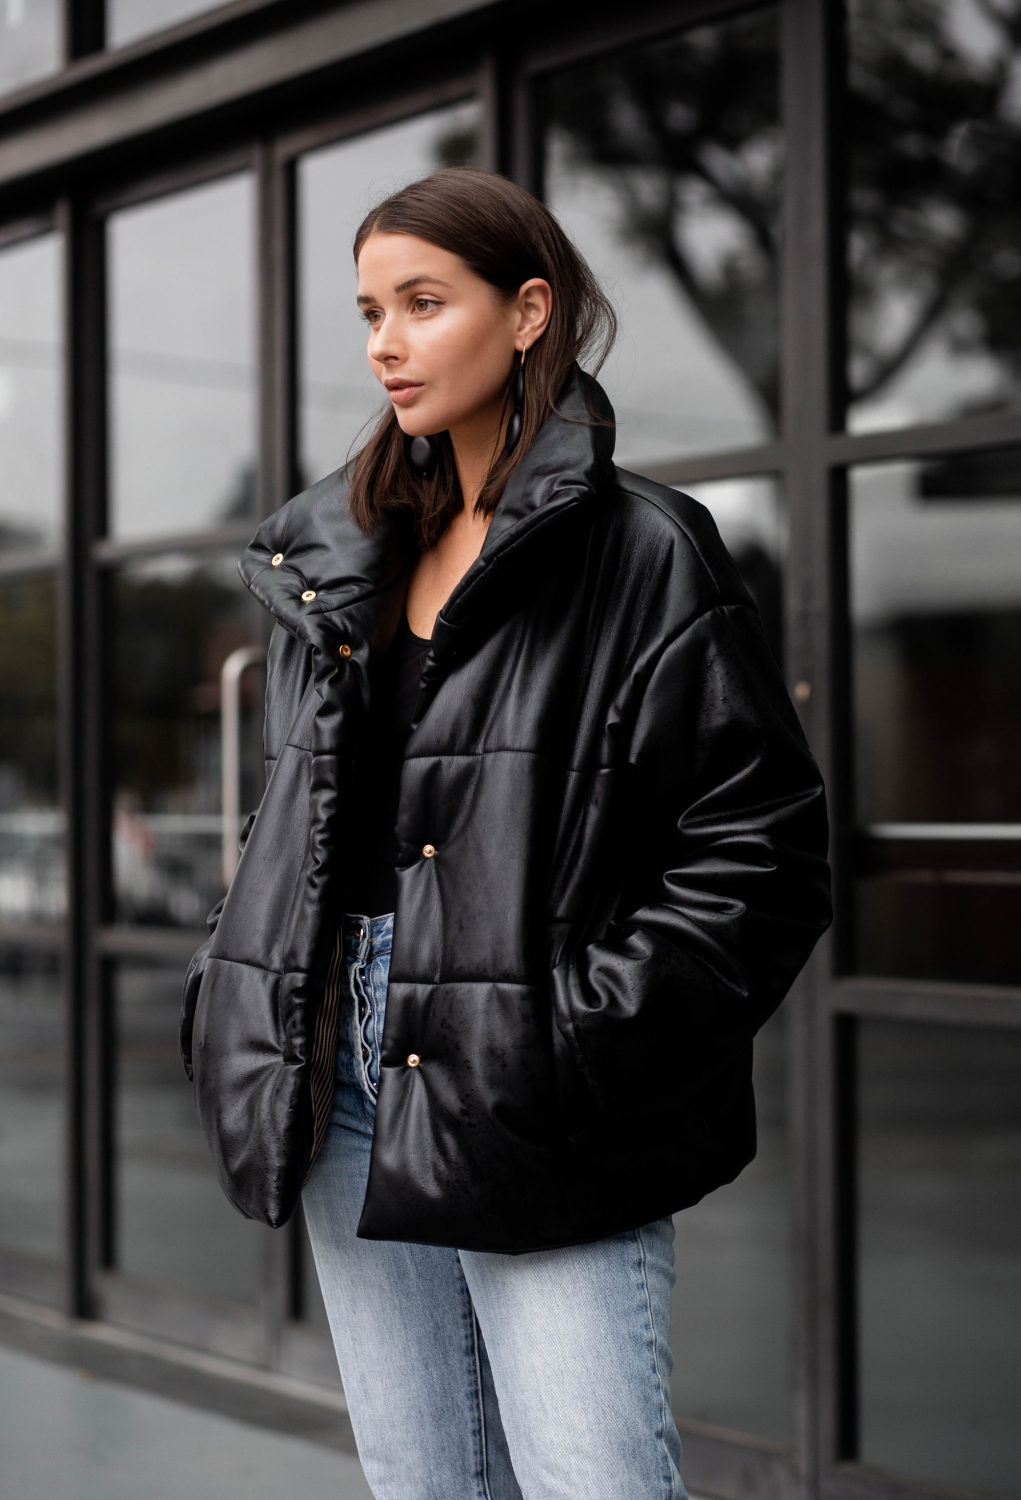 MBFWA Sydney Fashion Week 2018 | Day 1 | Outfit |Nanushka black puffy jacket | Style | HarperandHarley